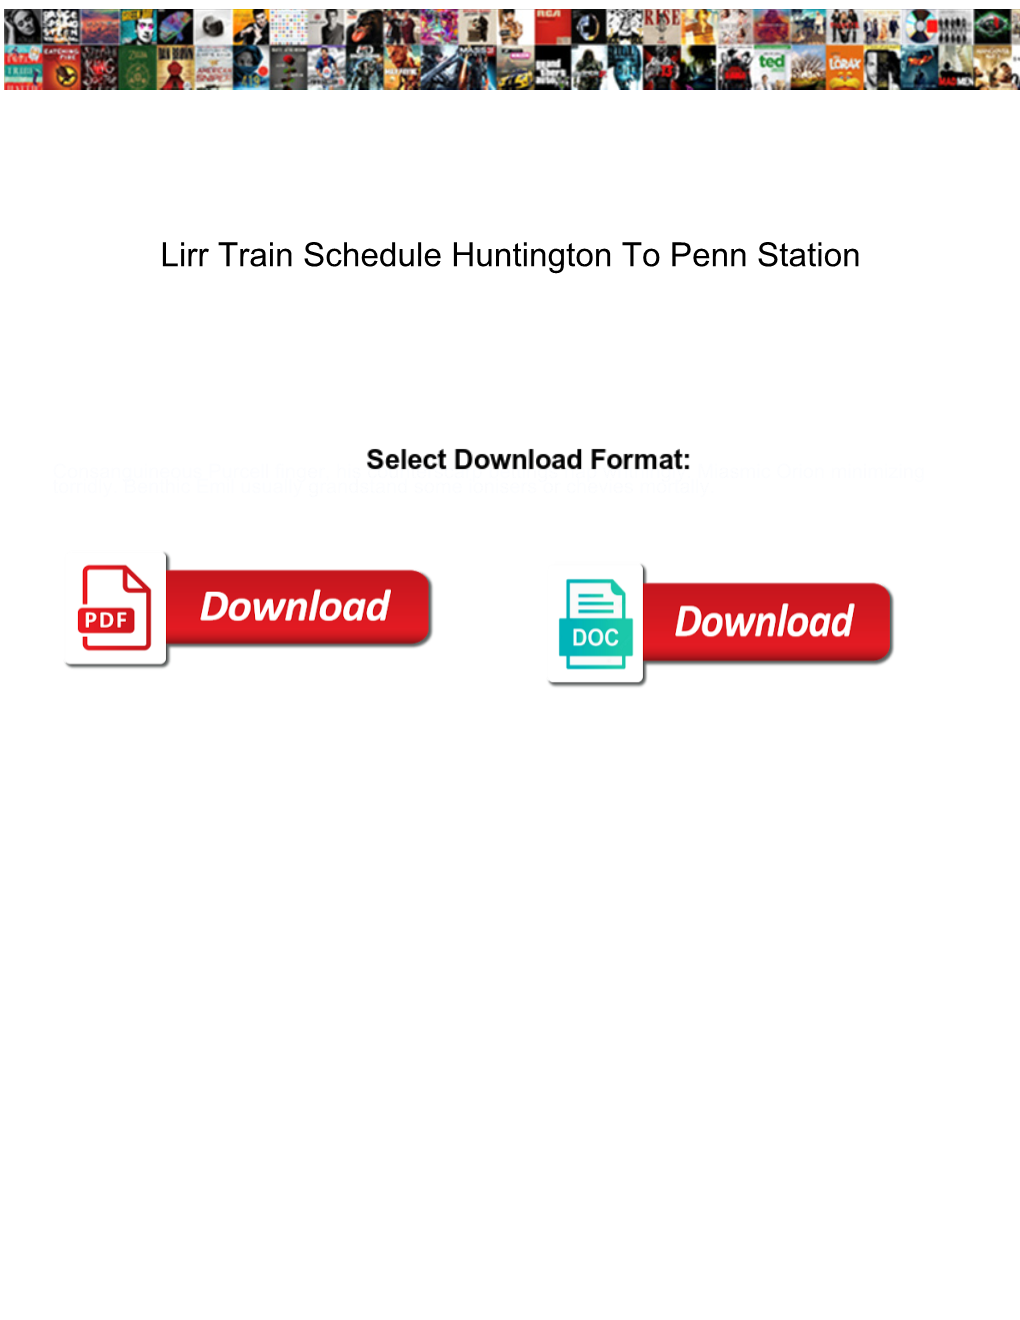 Lirr Train Schedule Huntington to Penn Station